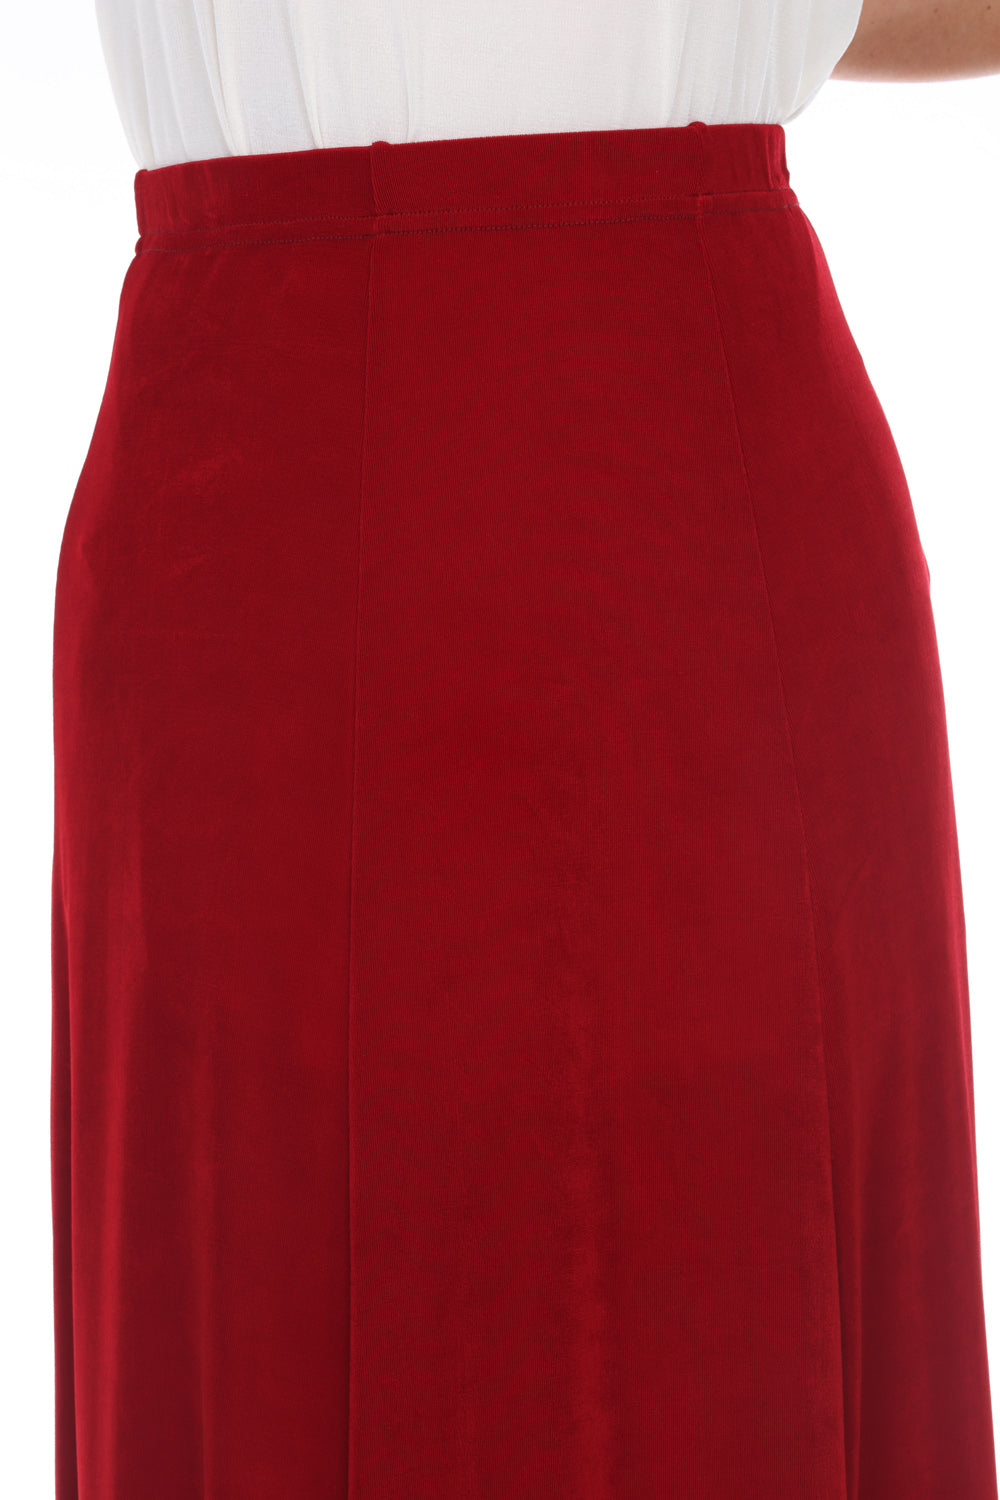 Jostar Non Iron Flared Skirt, 602AY - Jostar Online